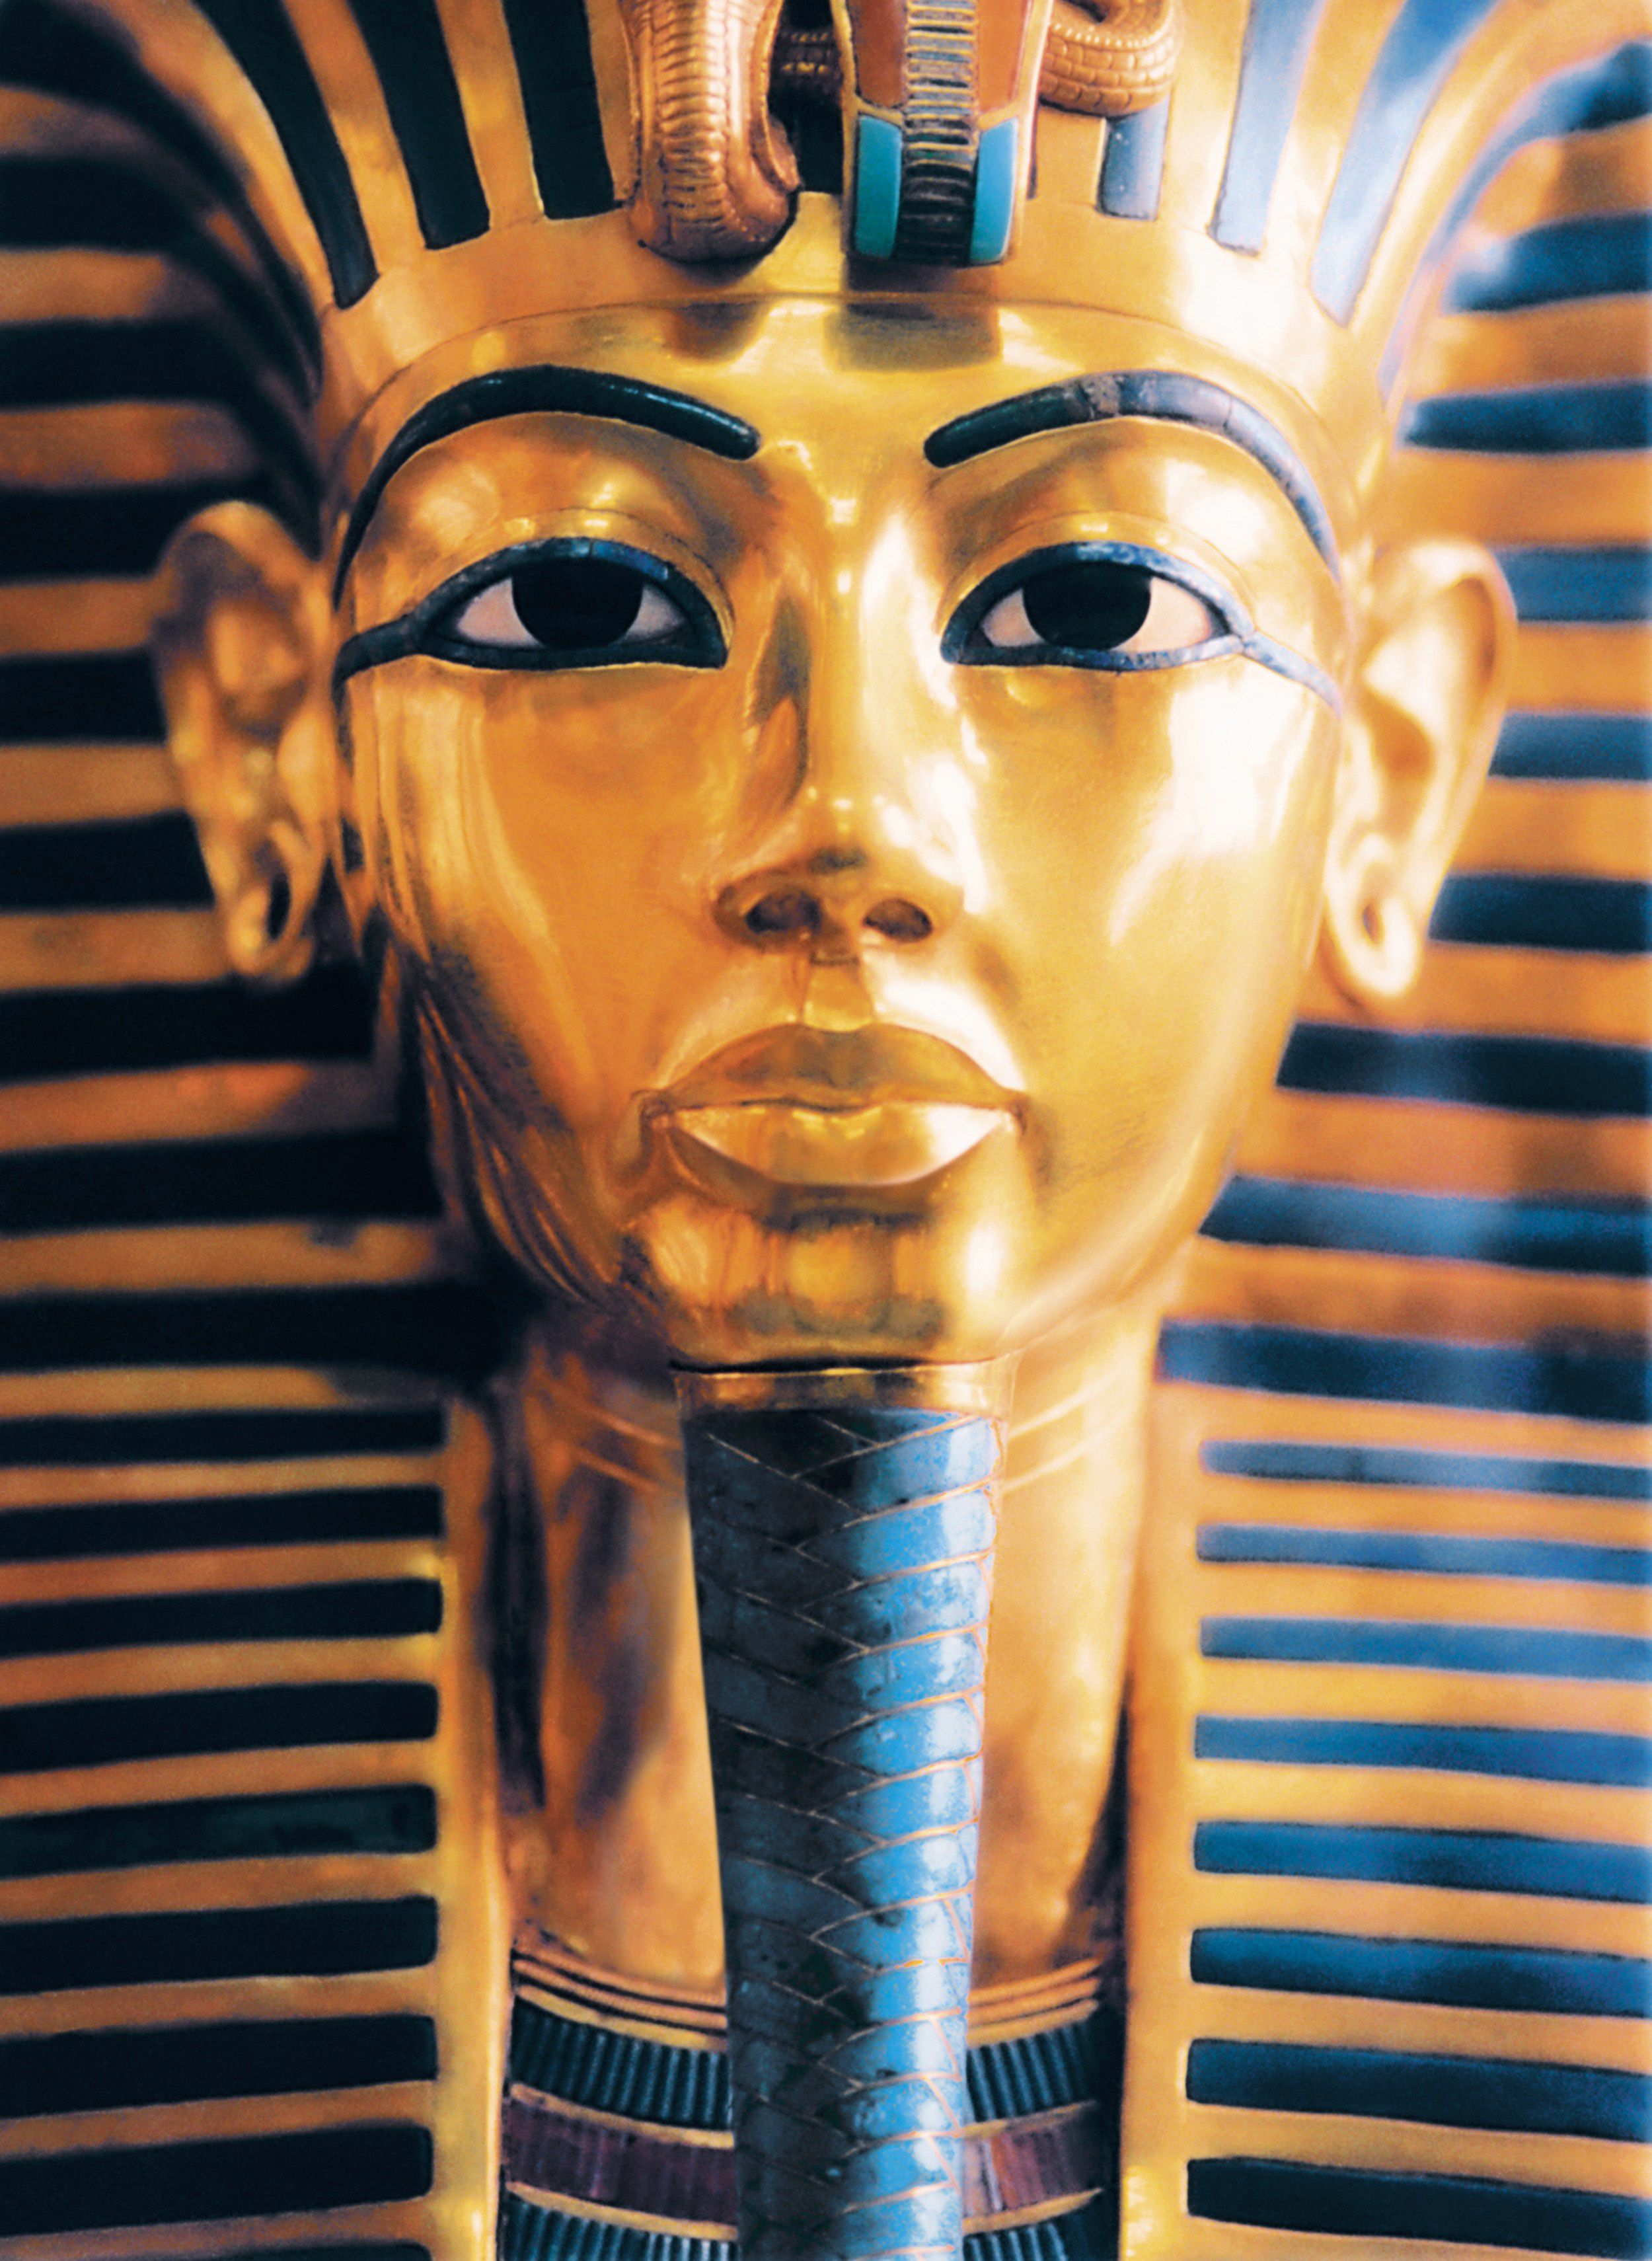 How Did King Tutankhamun Die?